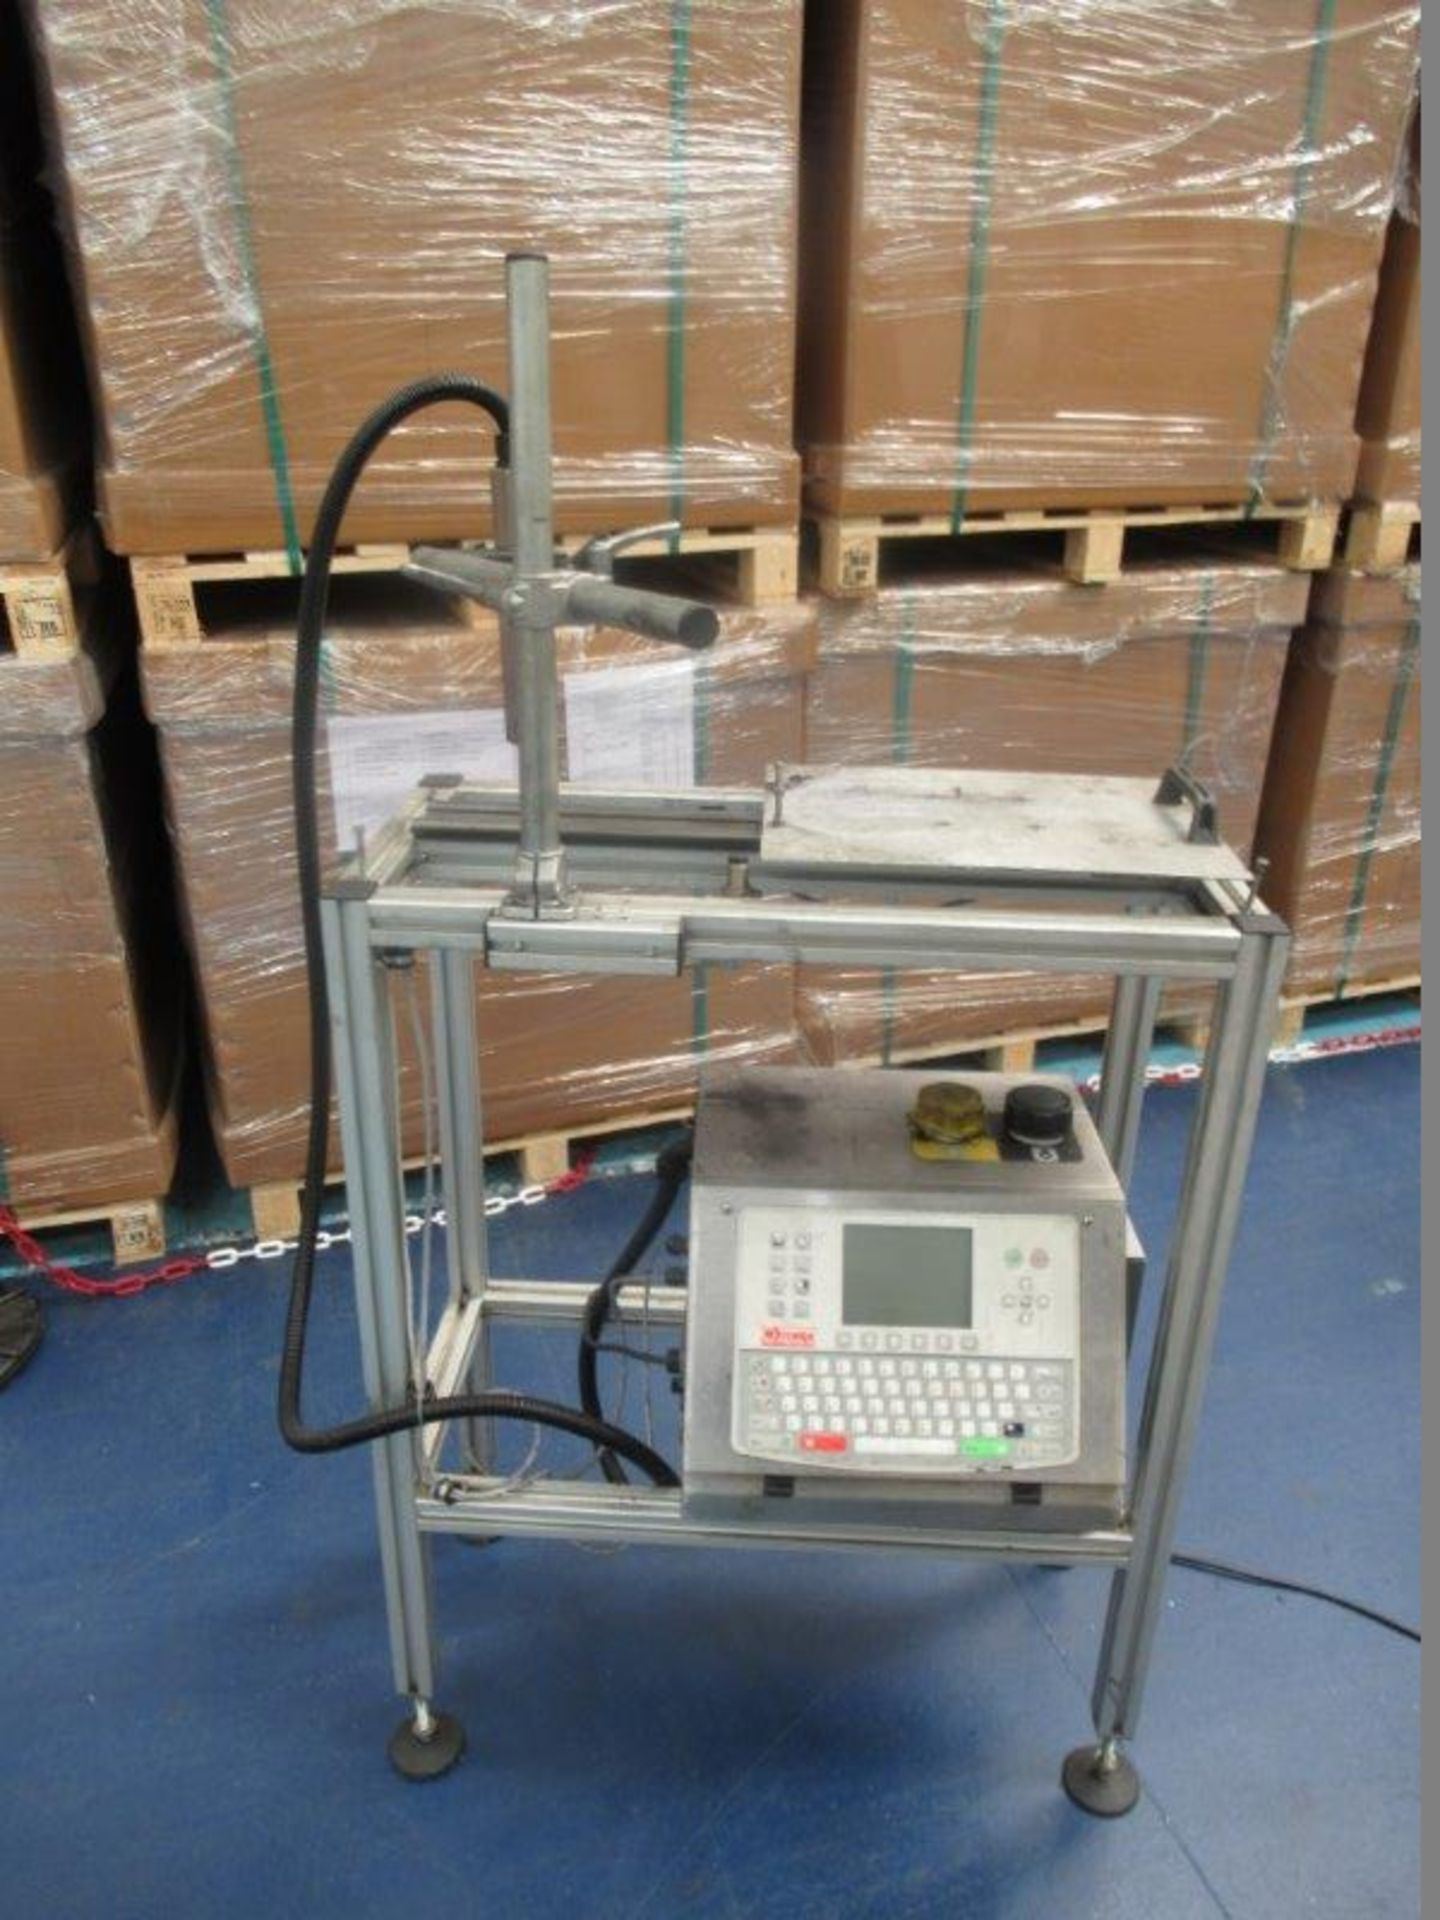 Citronix Model Ci700 Computer Controlled Parts Marking Machine Inkjet Printer, sn:0413052C